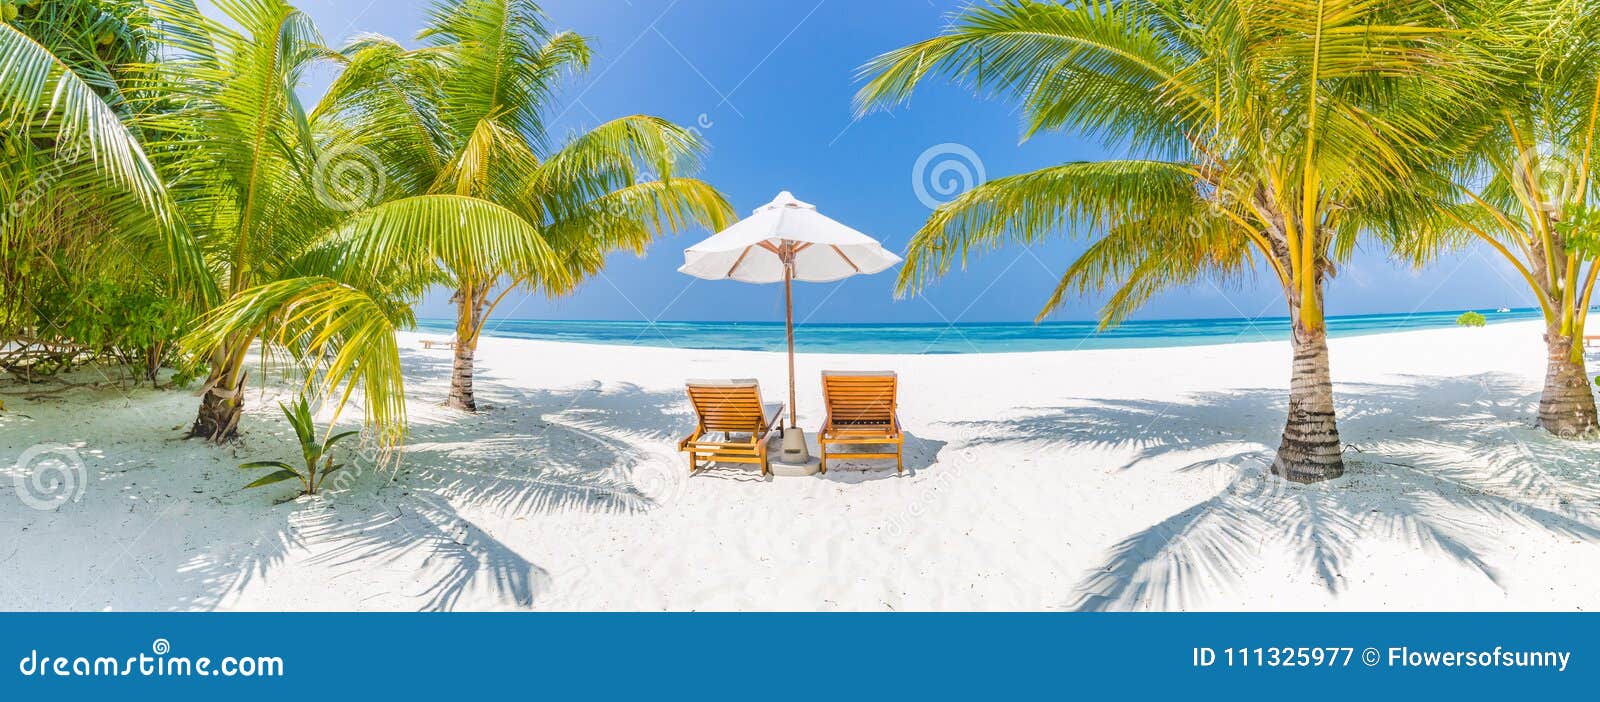 summer travel destination background panorama. tropical beach scene